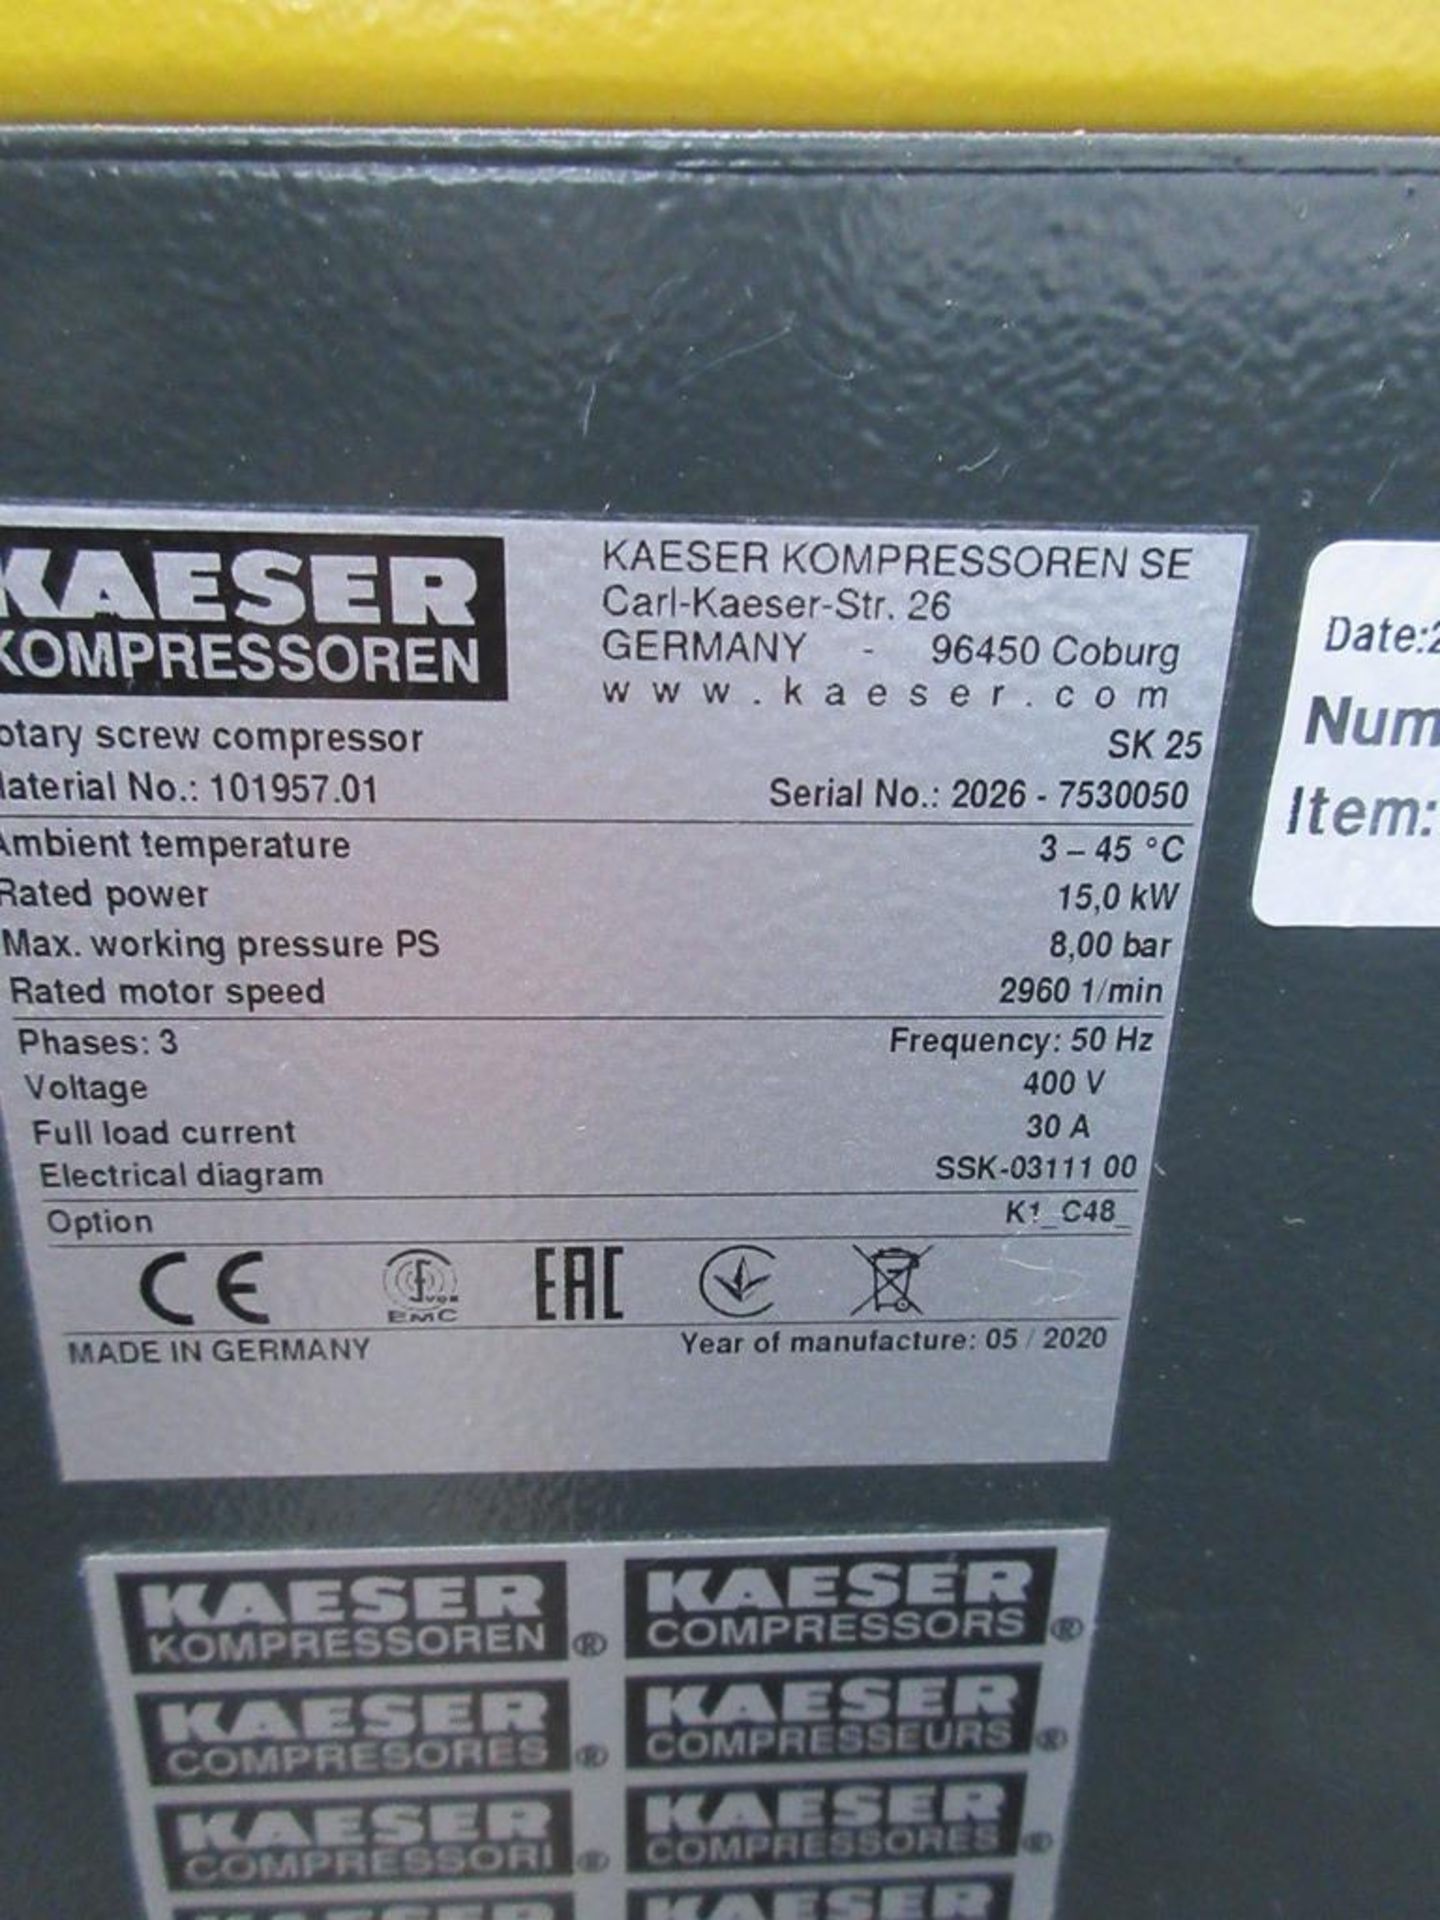 HPC Kaeser SK25 Sigma packaged screw compressor, serial no. 2026-7530050 (2020) - Image 3 of 4